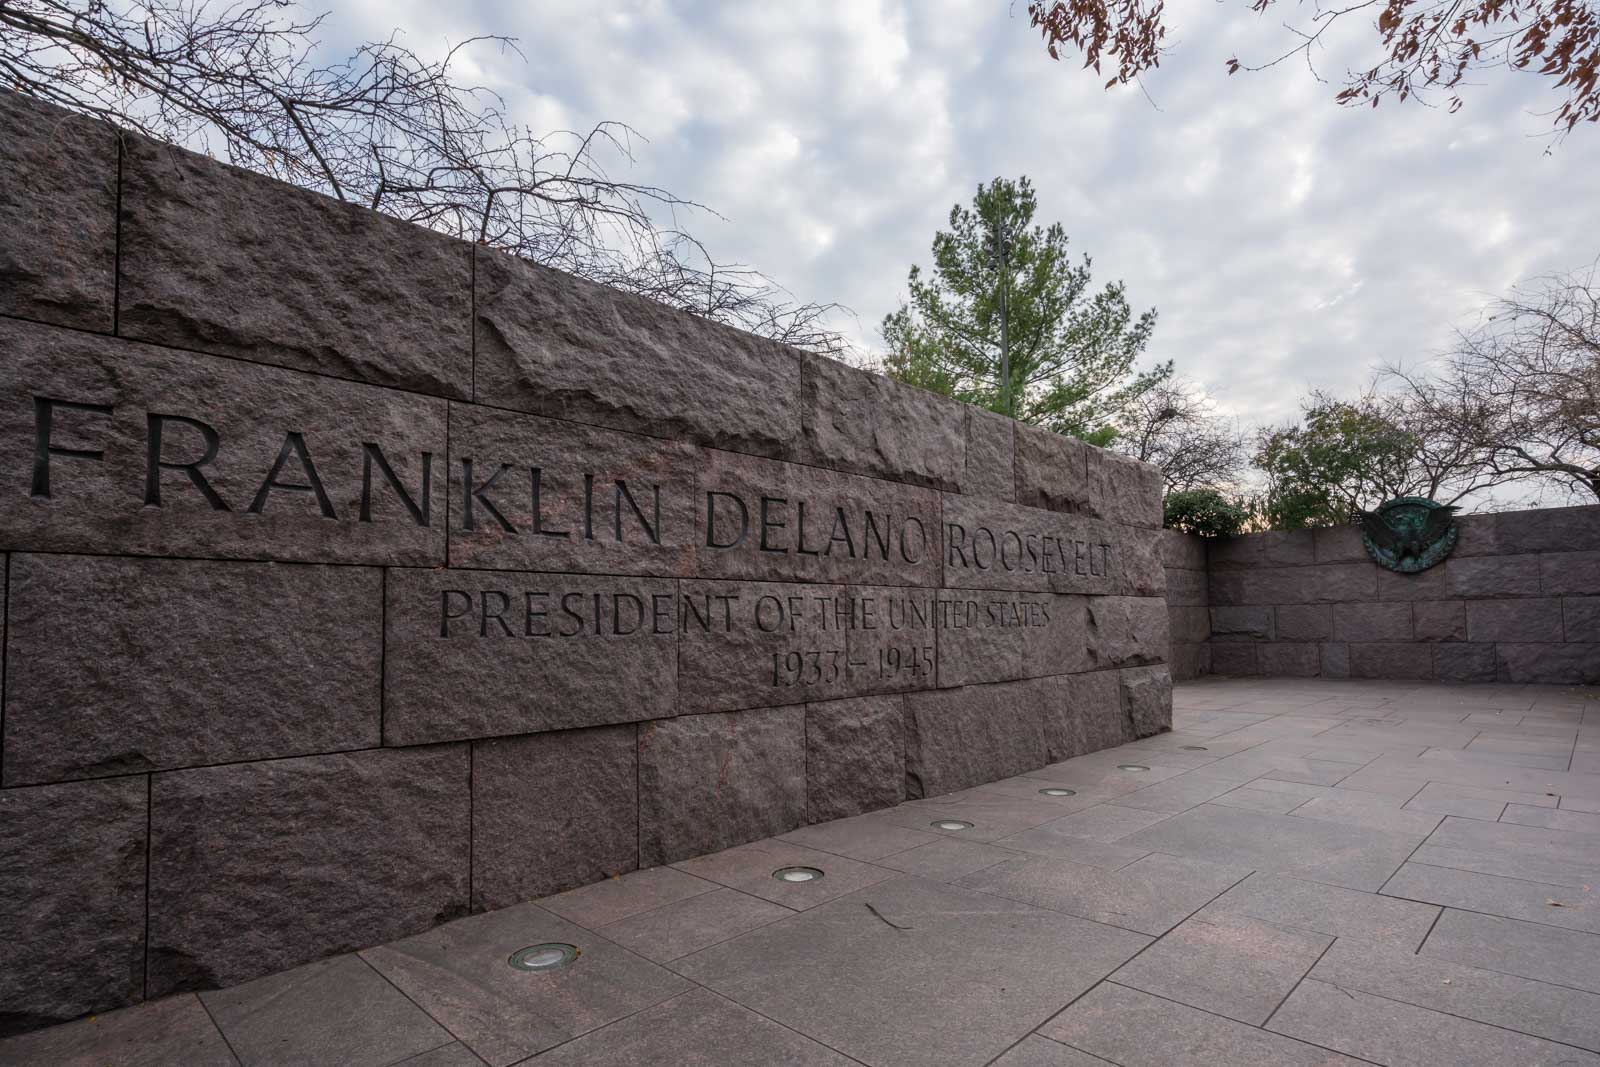 Franklin Delano Roosevelt Memorial entrance in Washington Dc